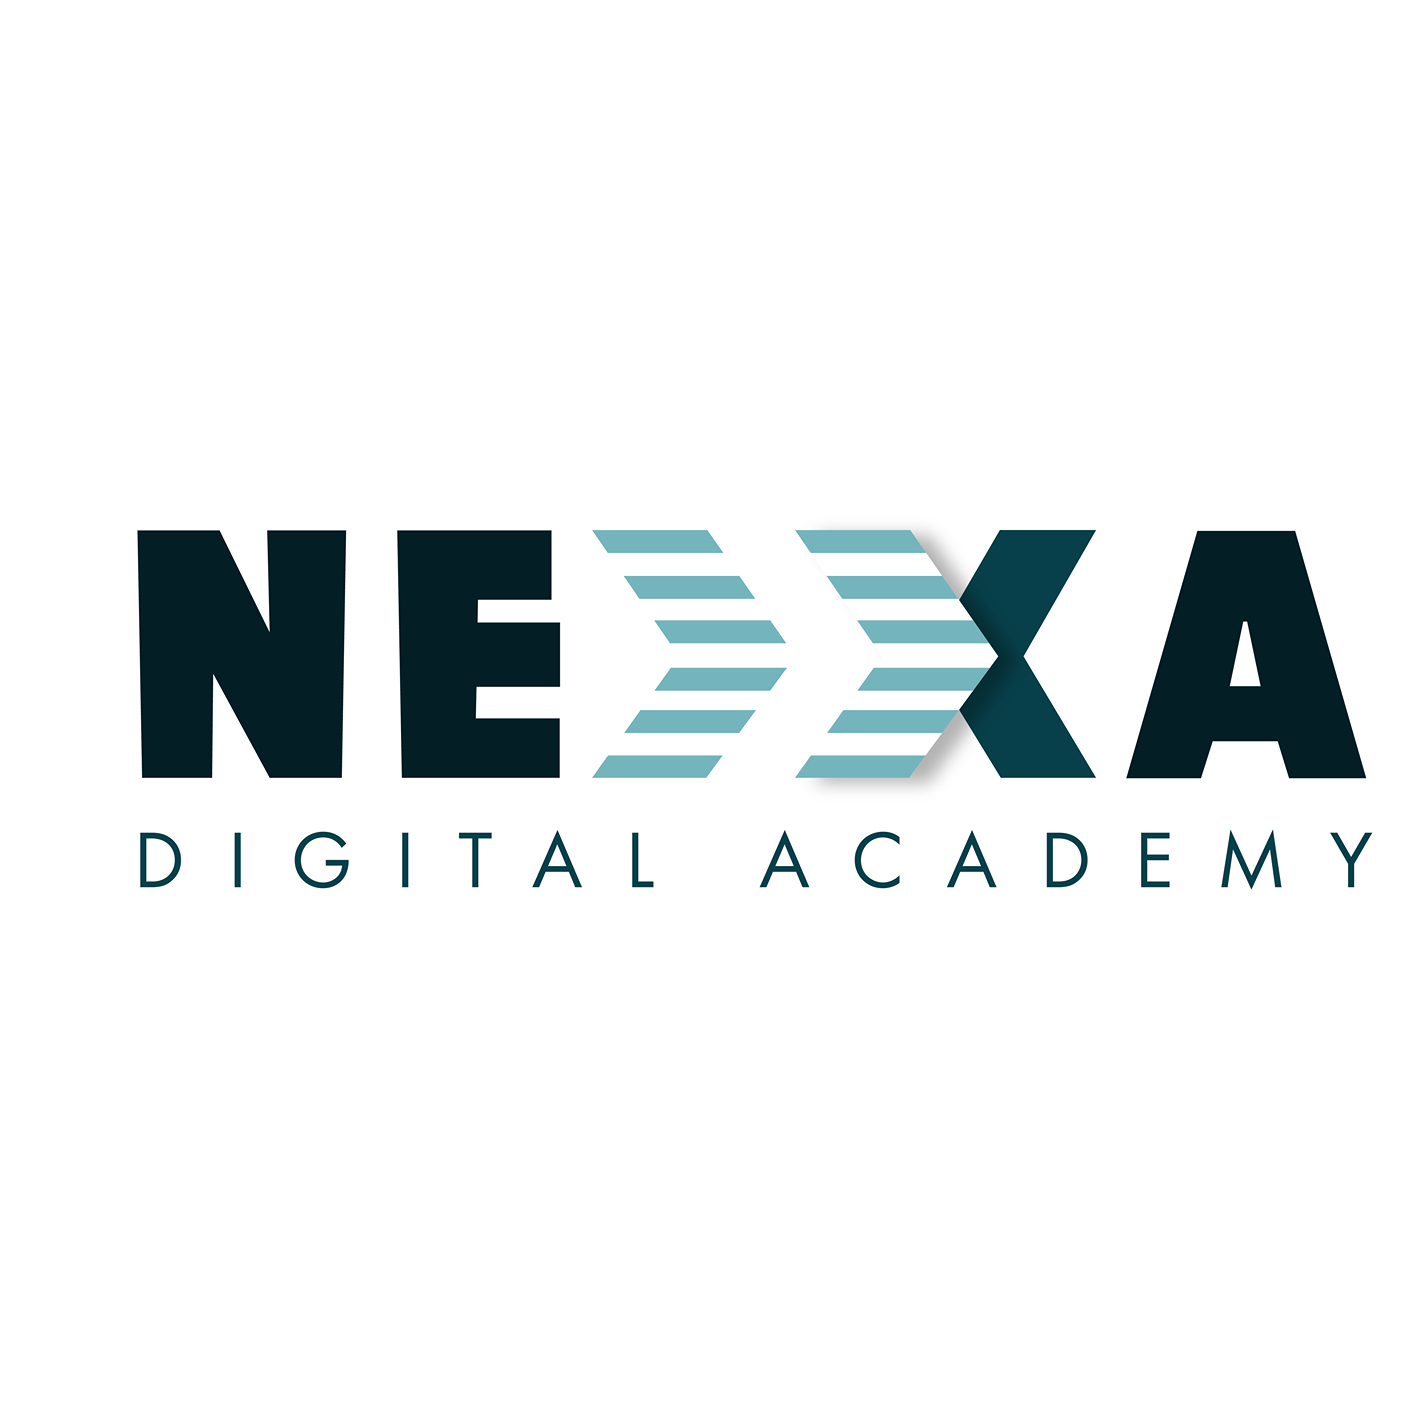 NEXXA DIGITAL academy